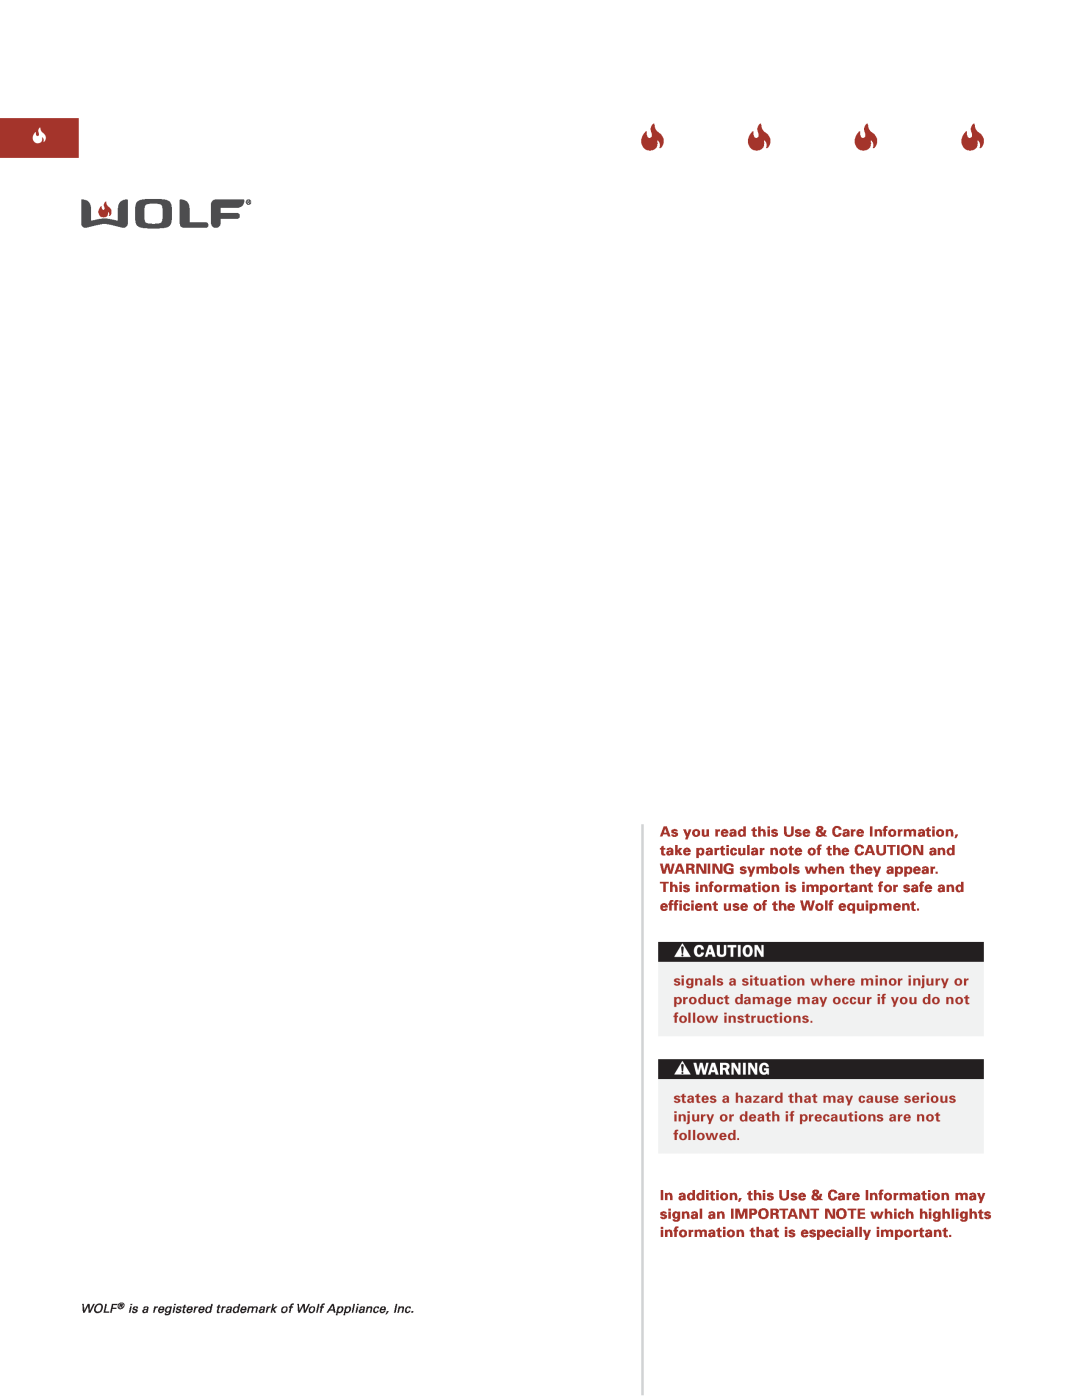 Sub-Zero Downdraft Ventilation manual WOLF is a registered trademark of Wolf Appliance, Inc 